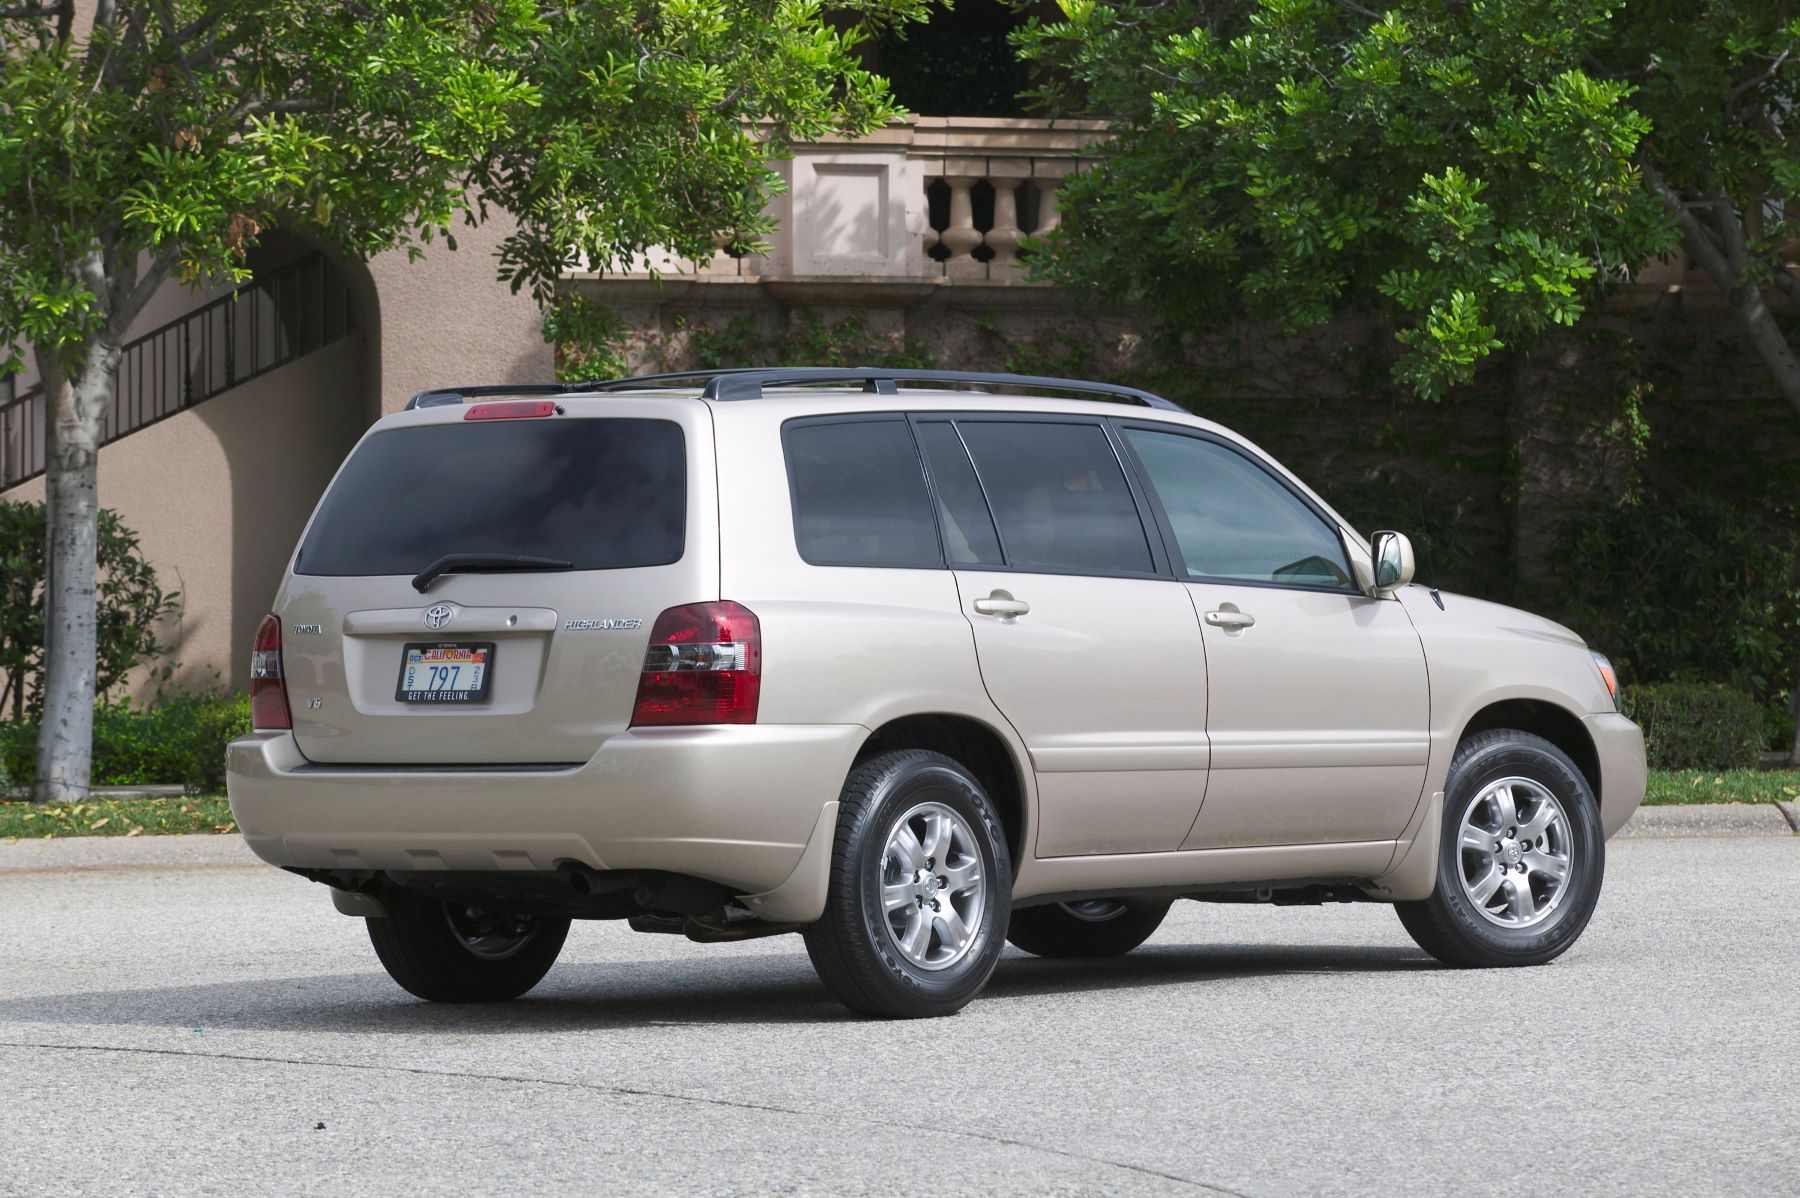 A beige 2004-2007 Toyota Highlander midsize SUV generation model parked on an asphalt suburban street